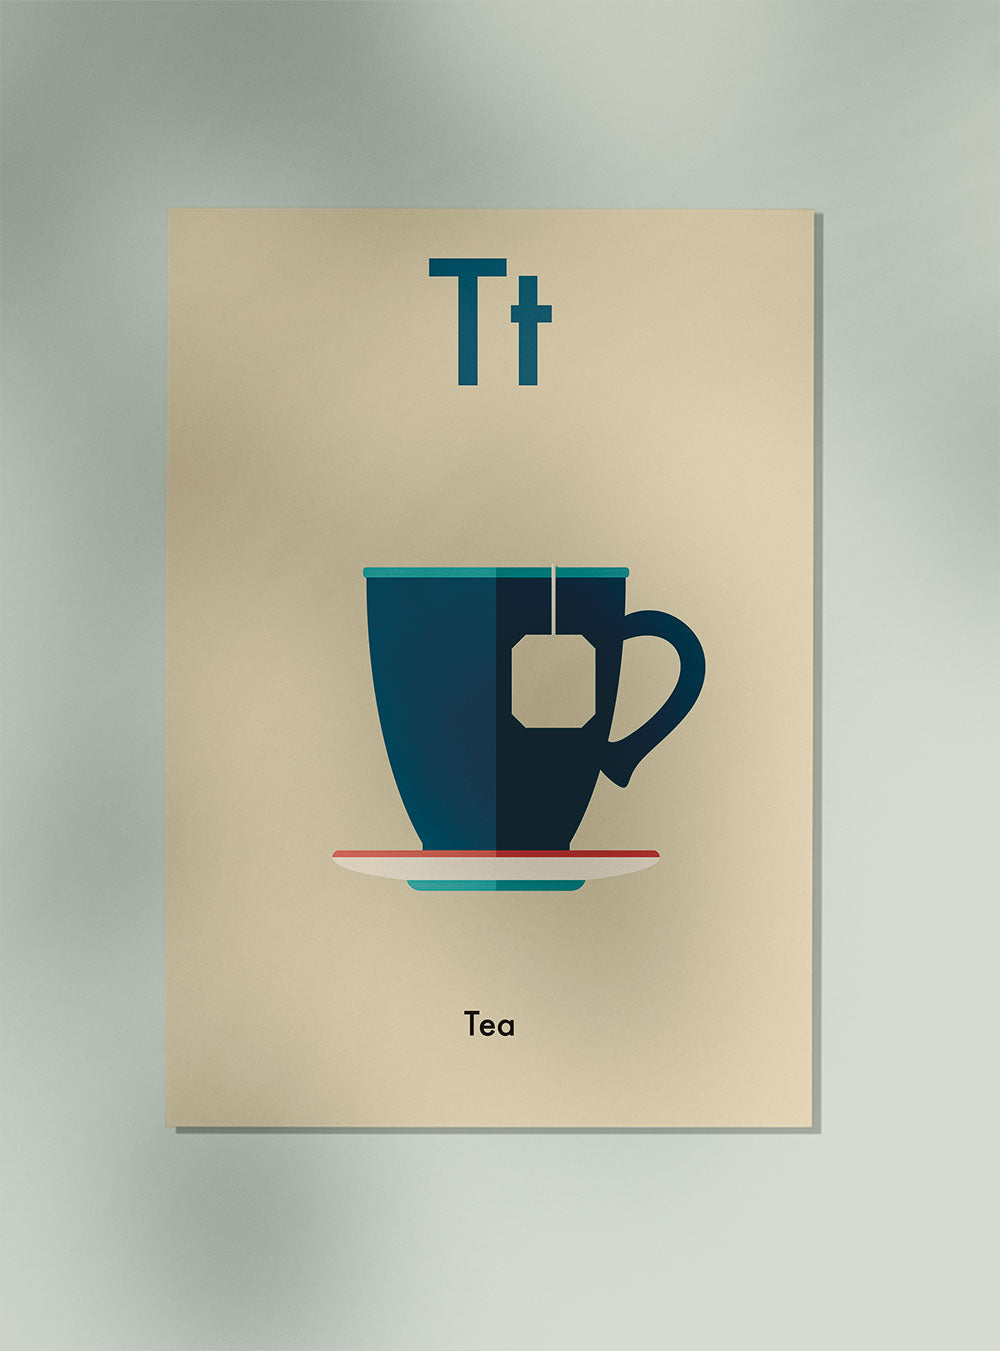 T for Tea Children's Alphabet Poster in English